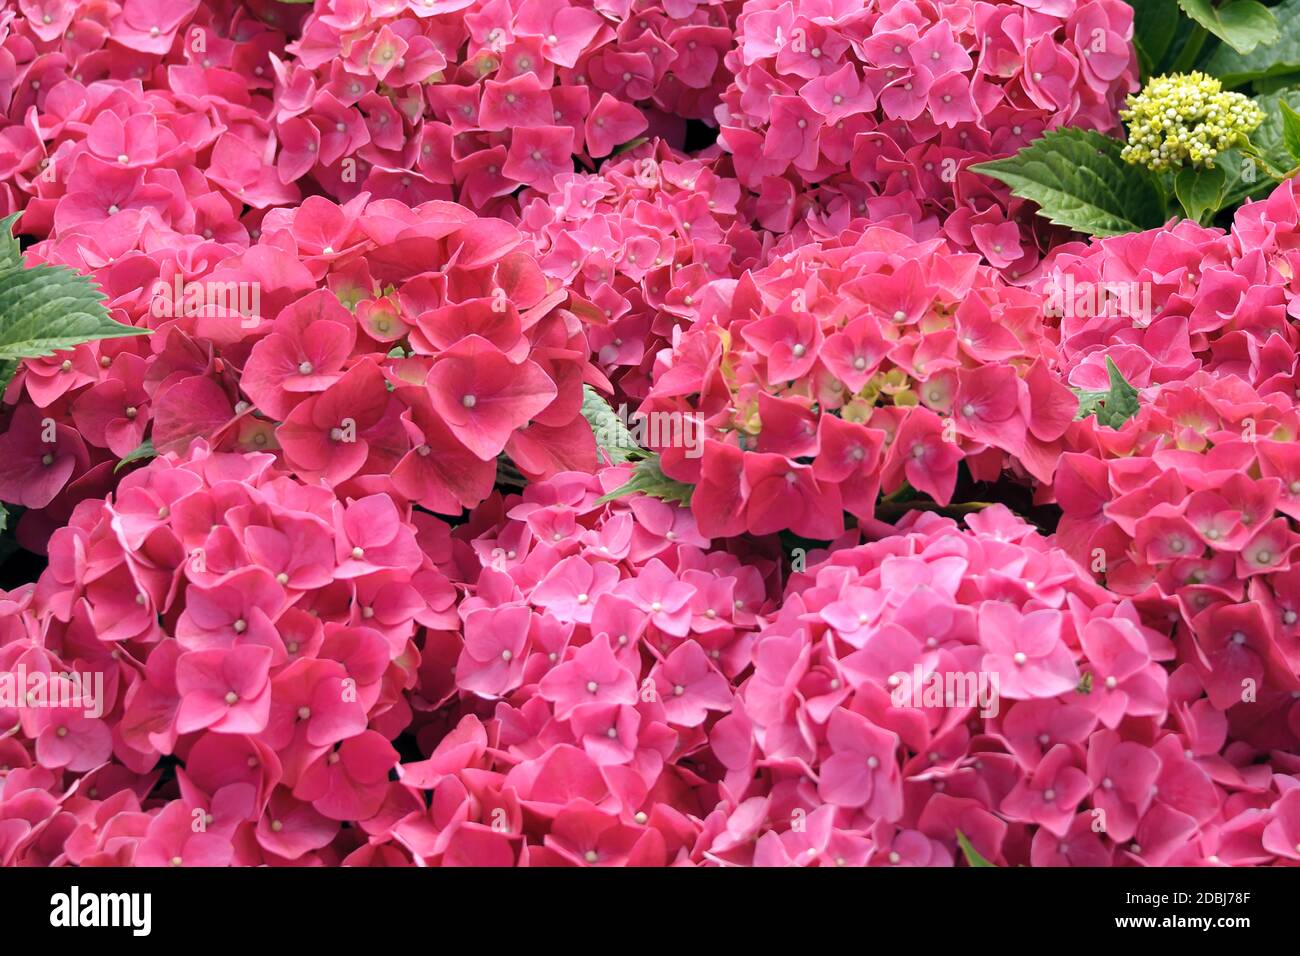 Garten-Hortensie (Hydrangea macrophylla 'Leuchtfeuer') Stock Photo